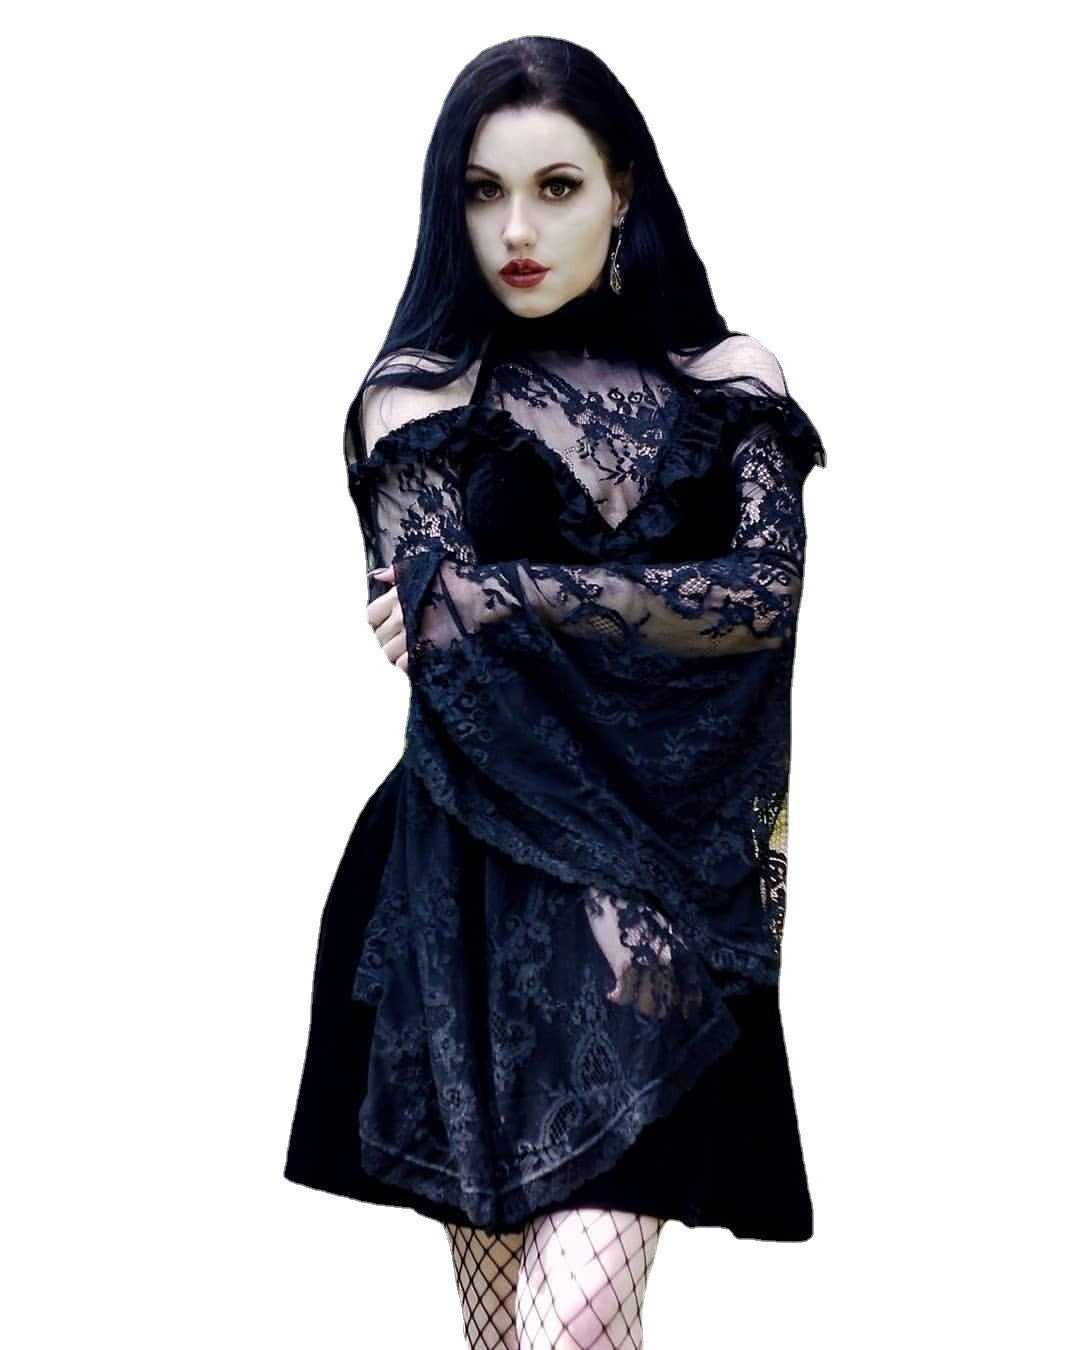 Maramalive™ Little Black Dress - Gothic Lace Panel Dress with Victorian elegance.